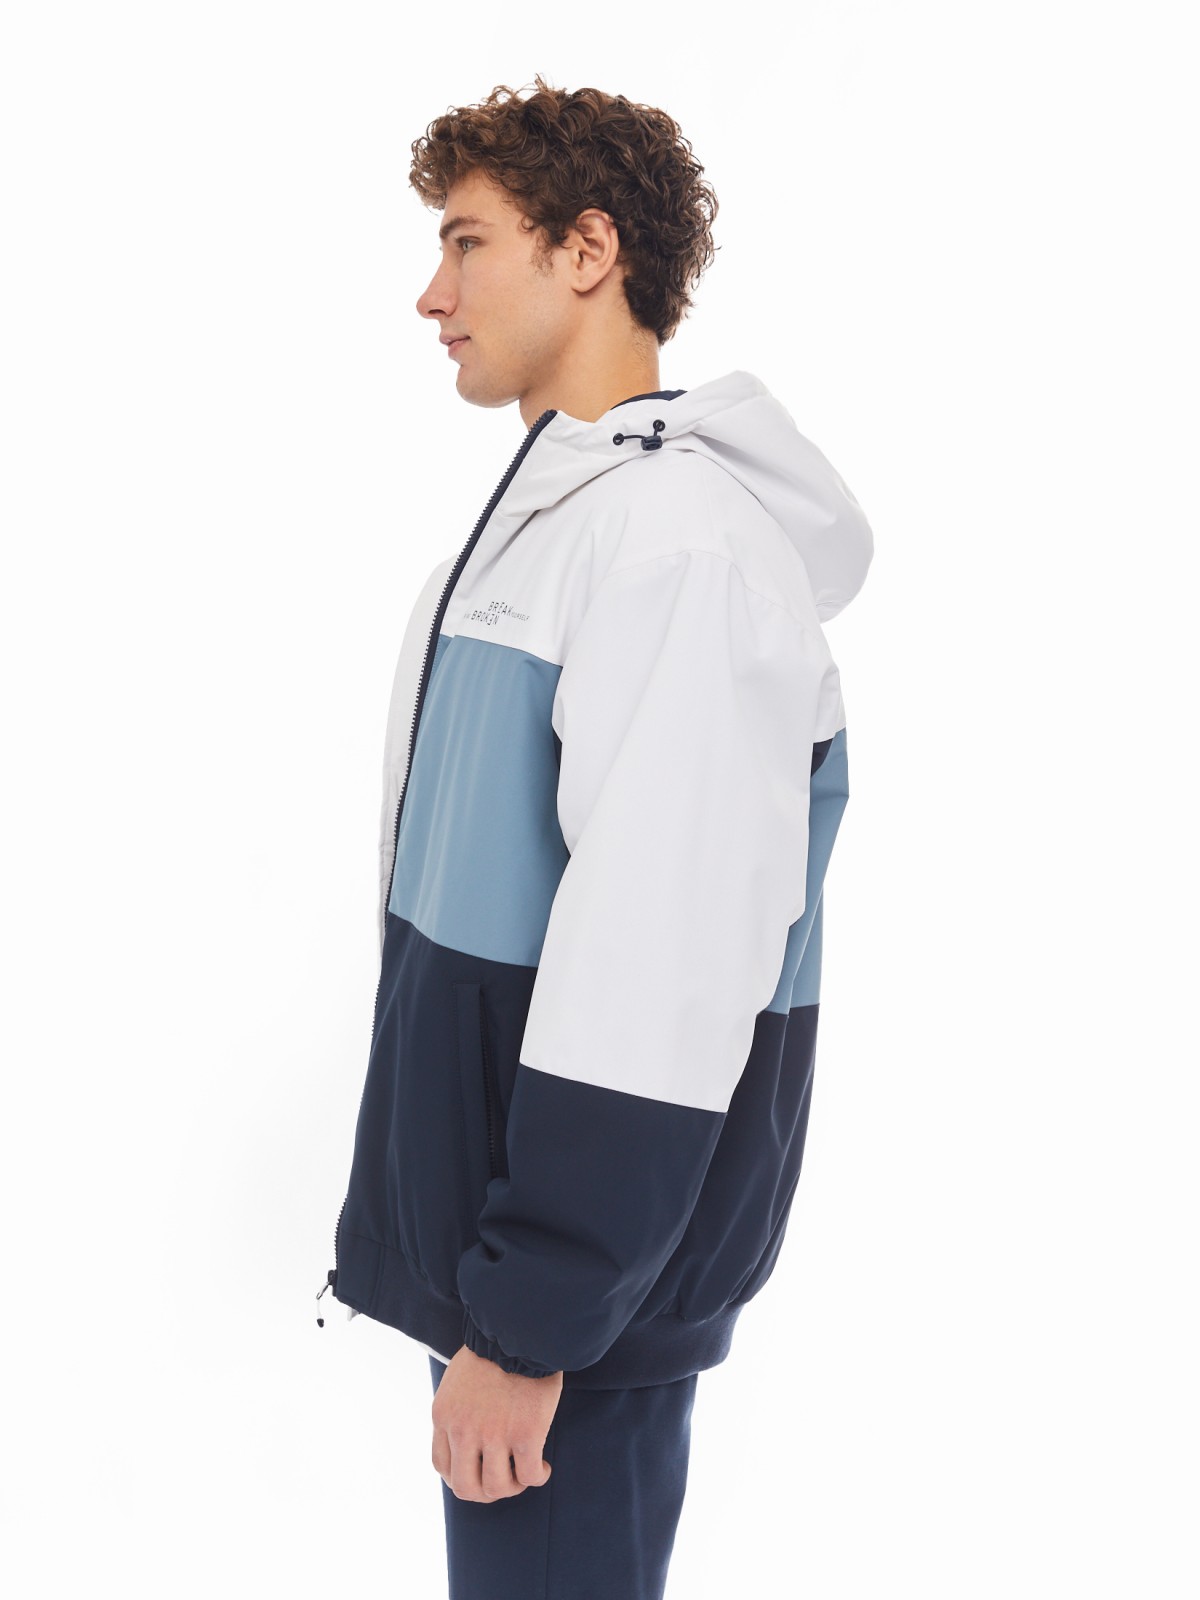 Утеплённая куртка-бомбер на синтепоне с капюшоном zolla 01412510L054, цвет синий, размер L - фото 3